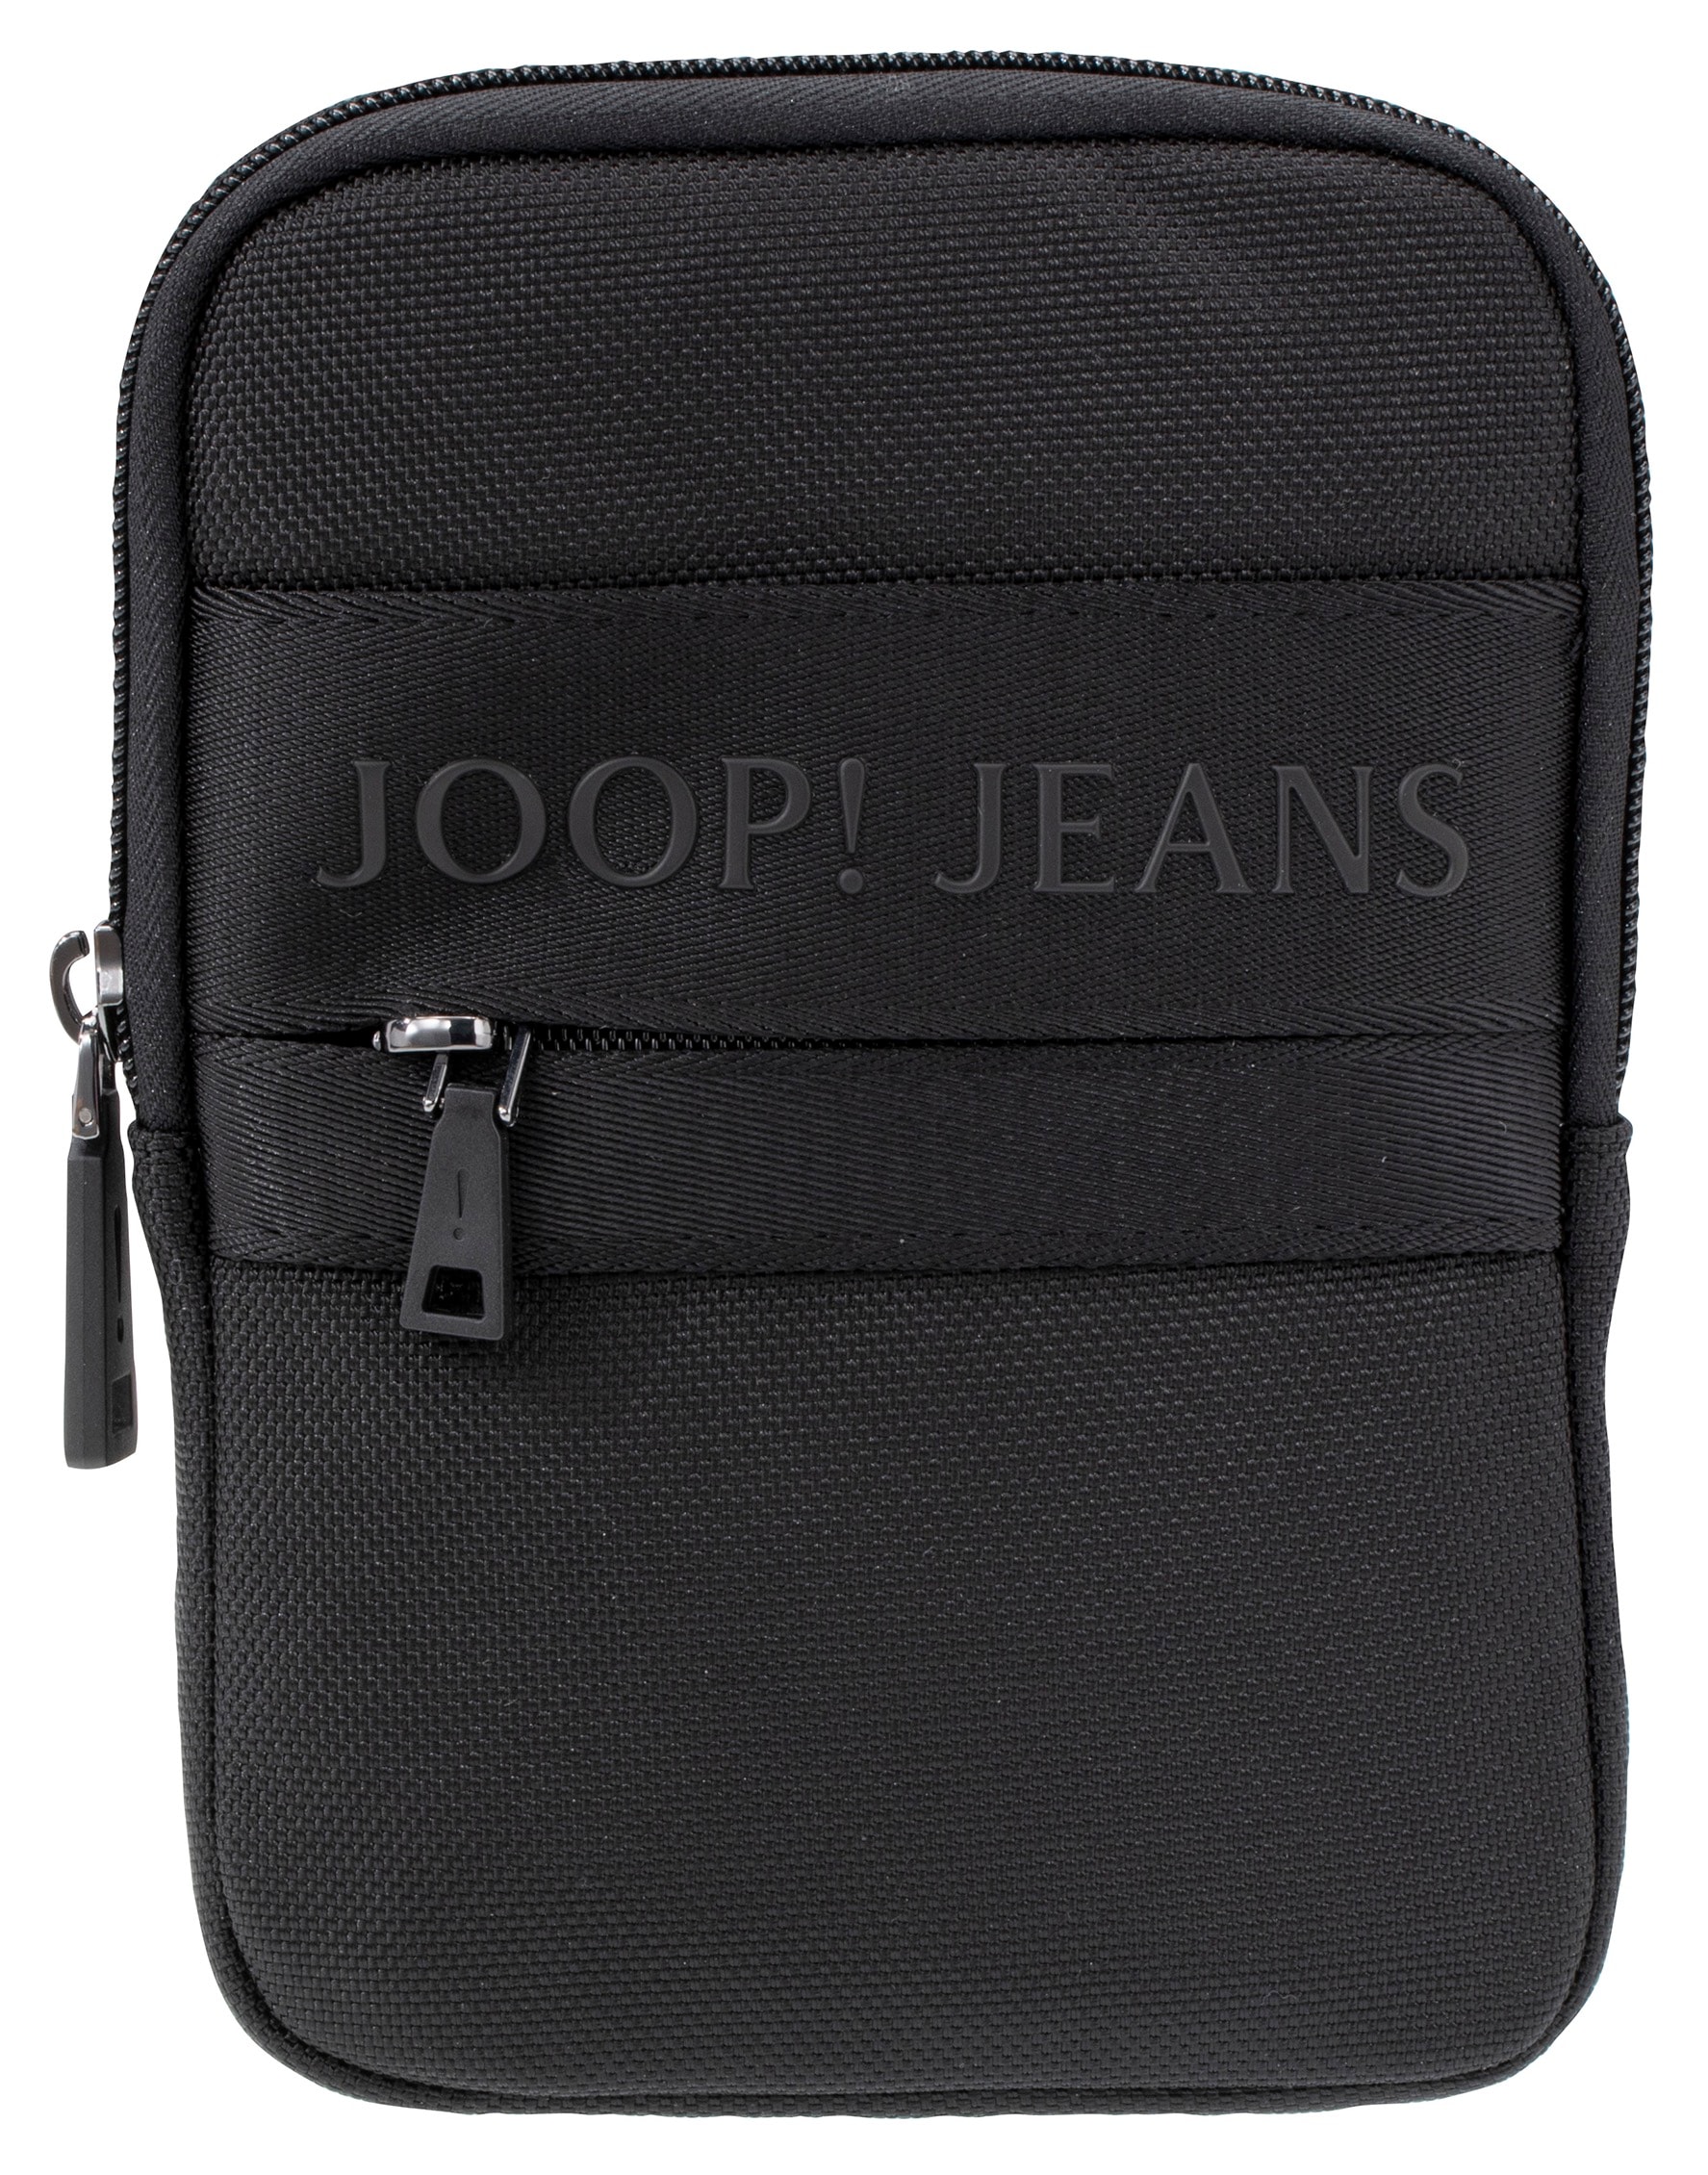 Format bei Jeans xsvz 1«, Mini online UNIVERSAL »modica Umhängetasche rafael Joop im shoulderbag